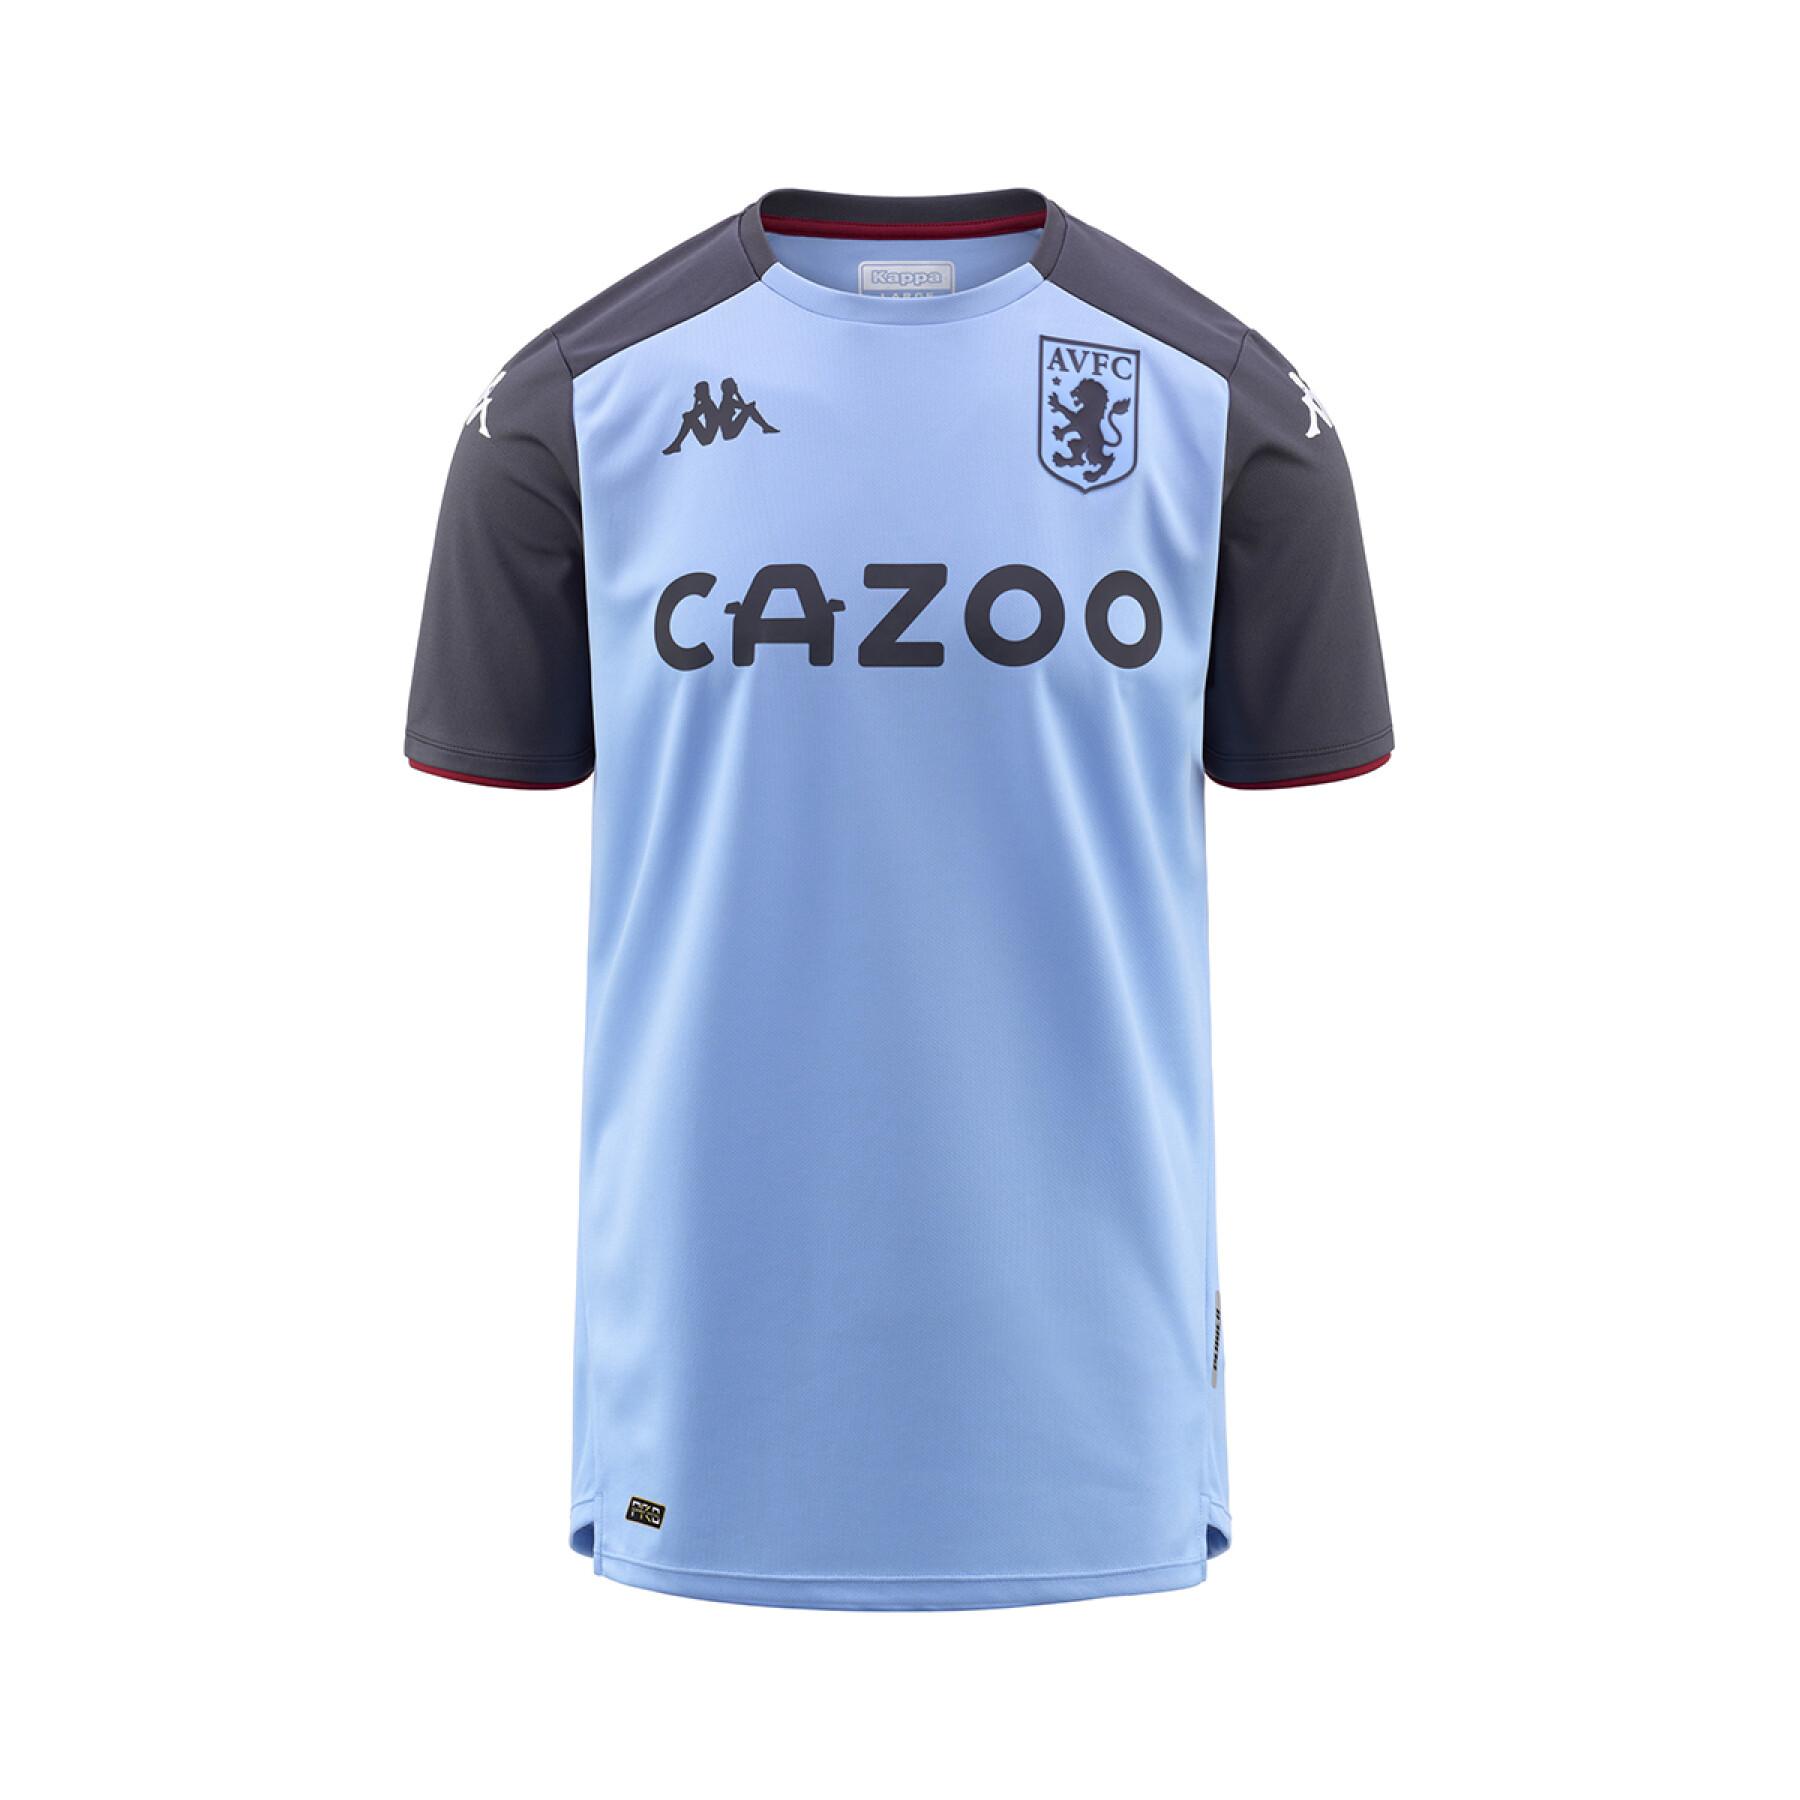 Training jersey Aston Villa FC 2021/22 abou pro 5